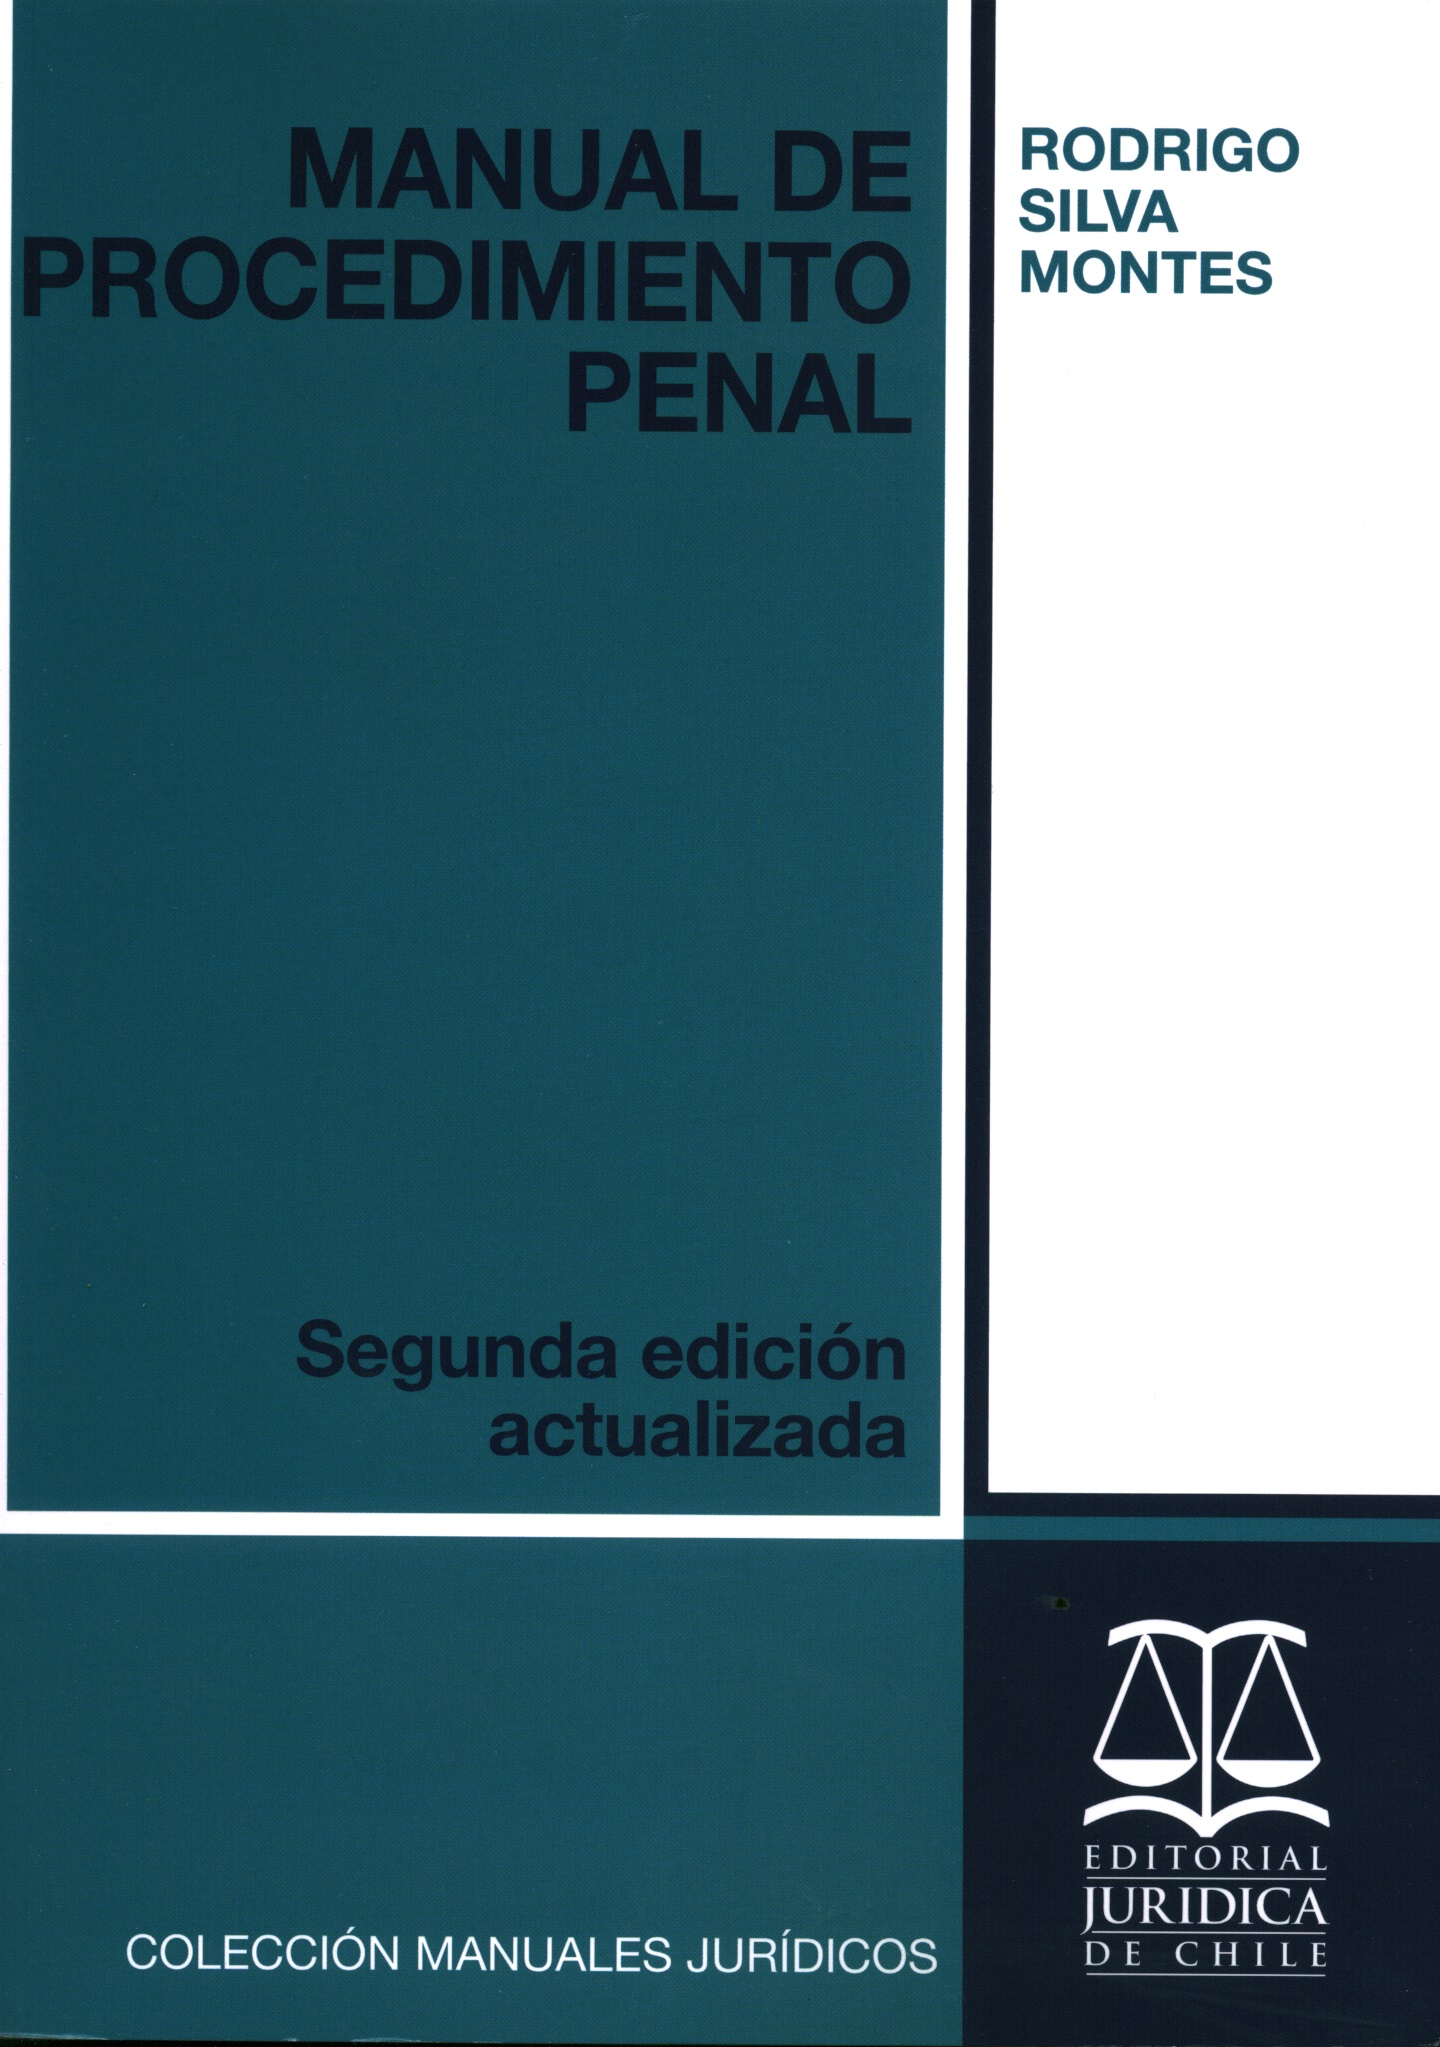 Manual de procedimiento penal